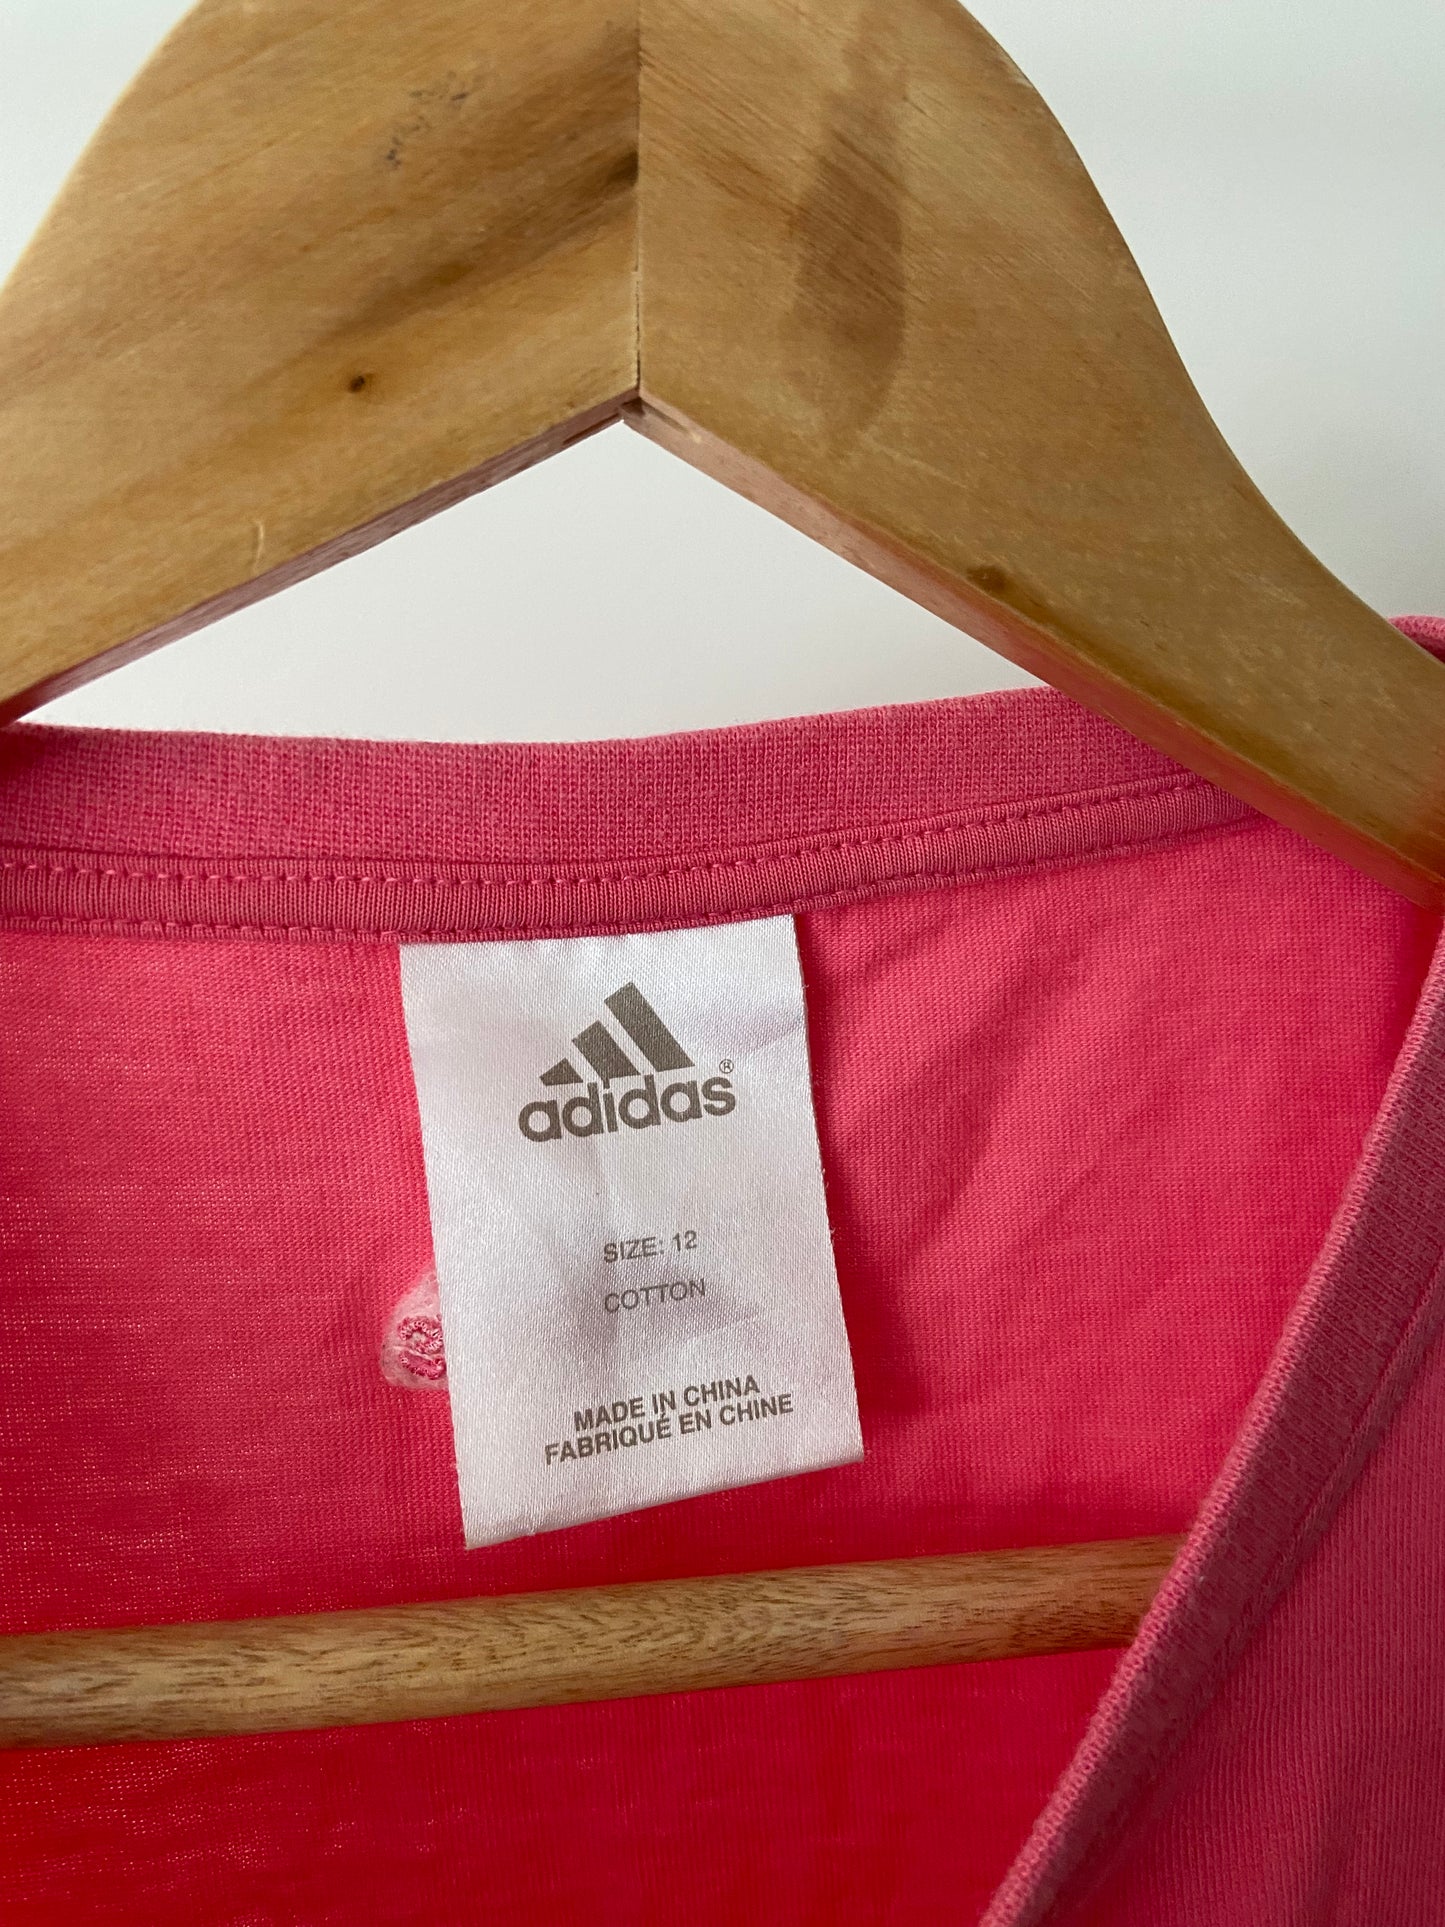 00’s Adidas pink tee